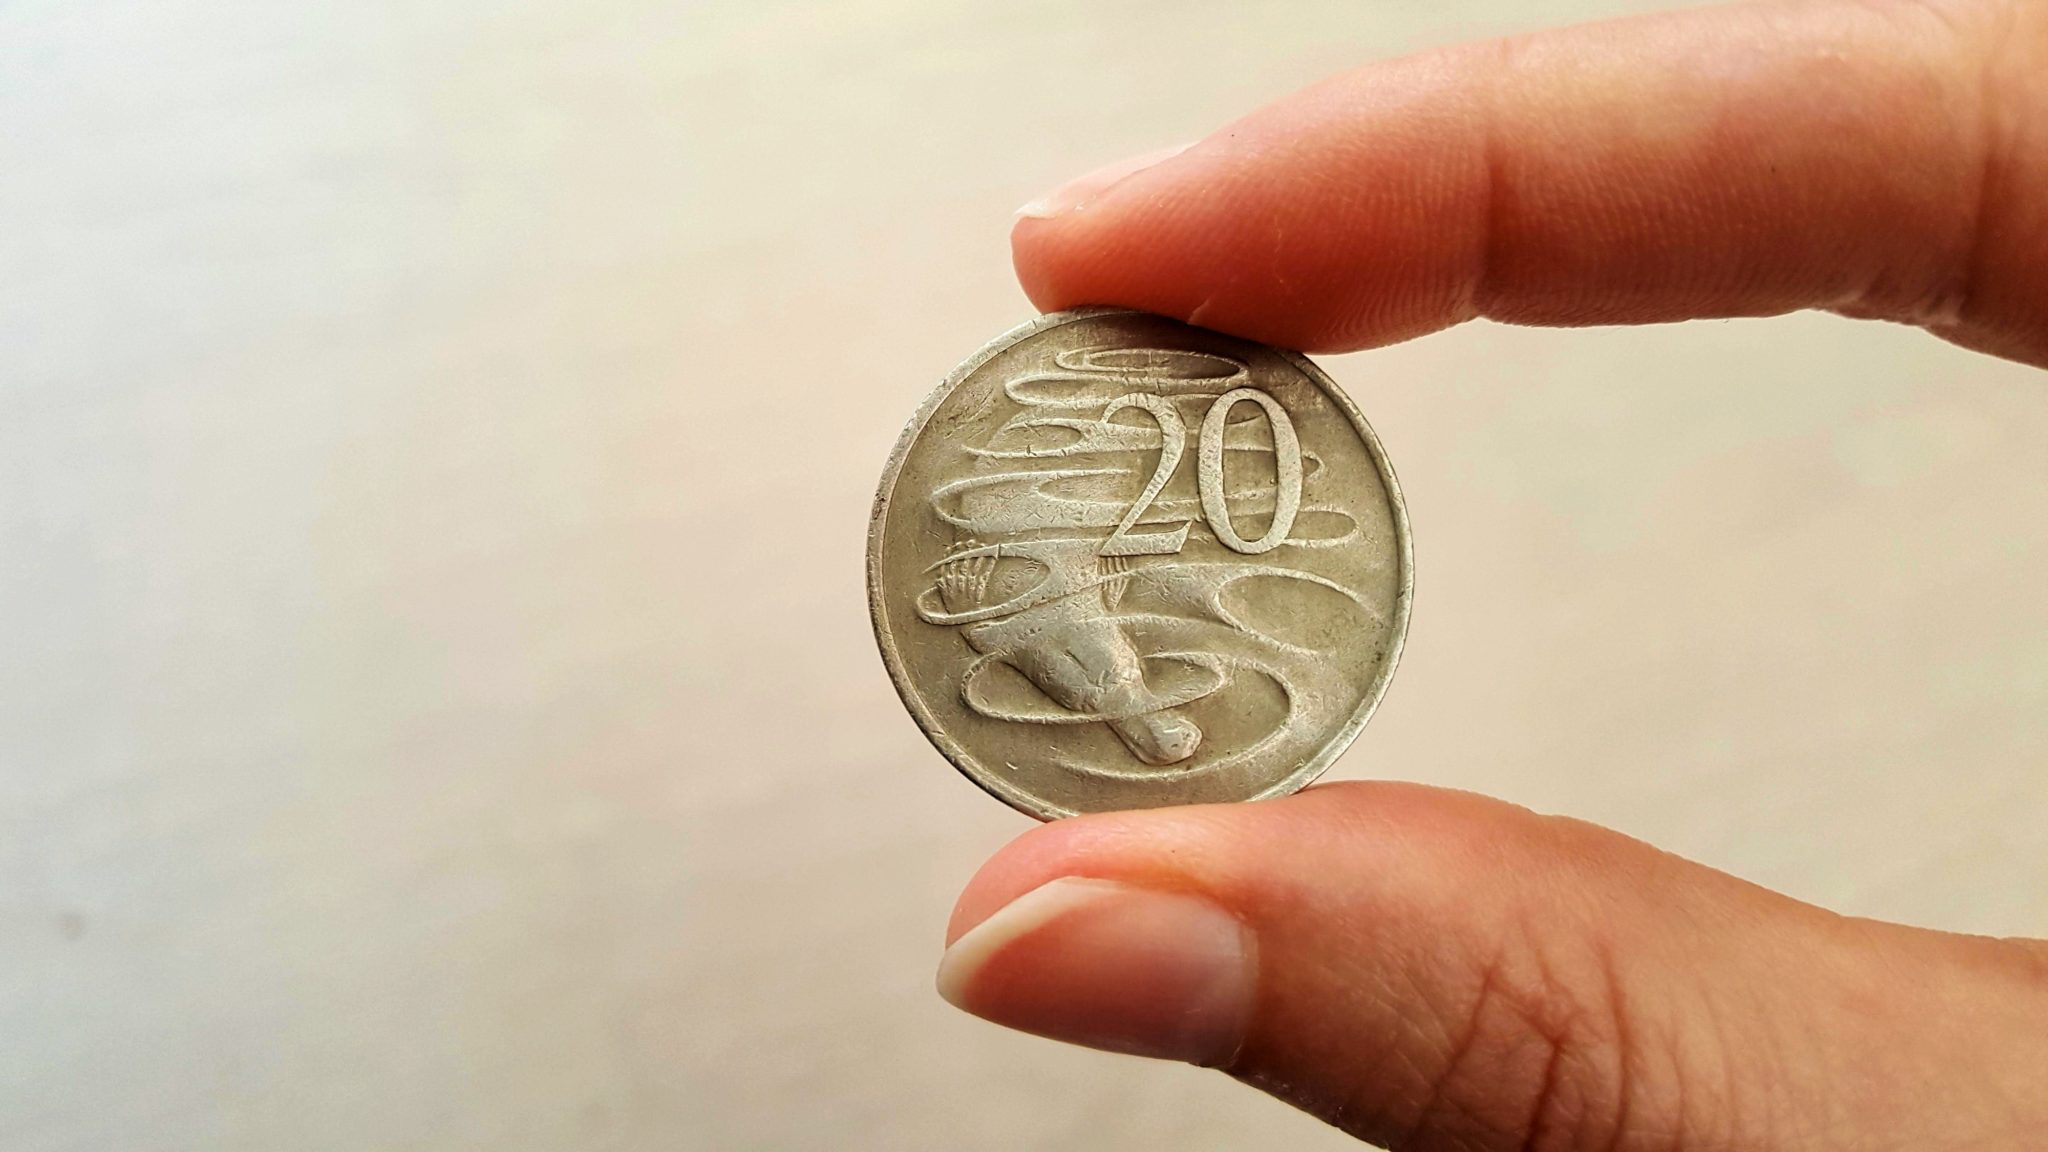 Platypus on the 20 cent Australian coin.